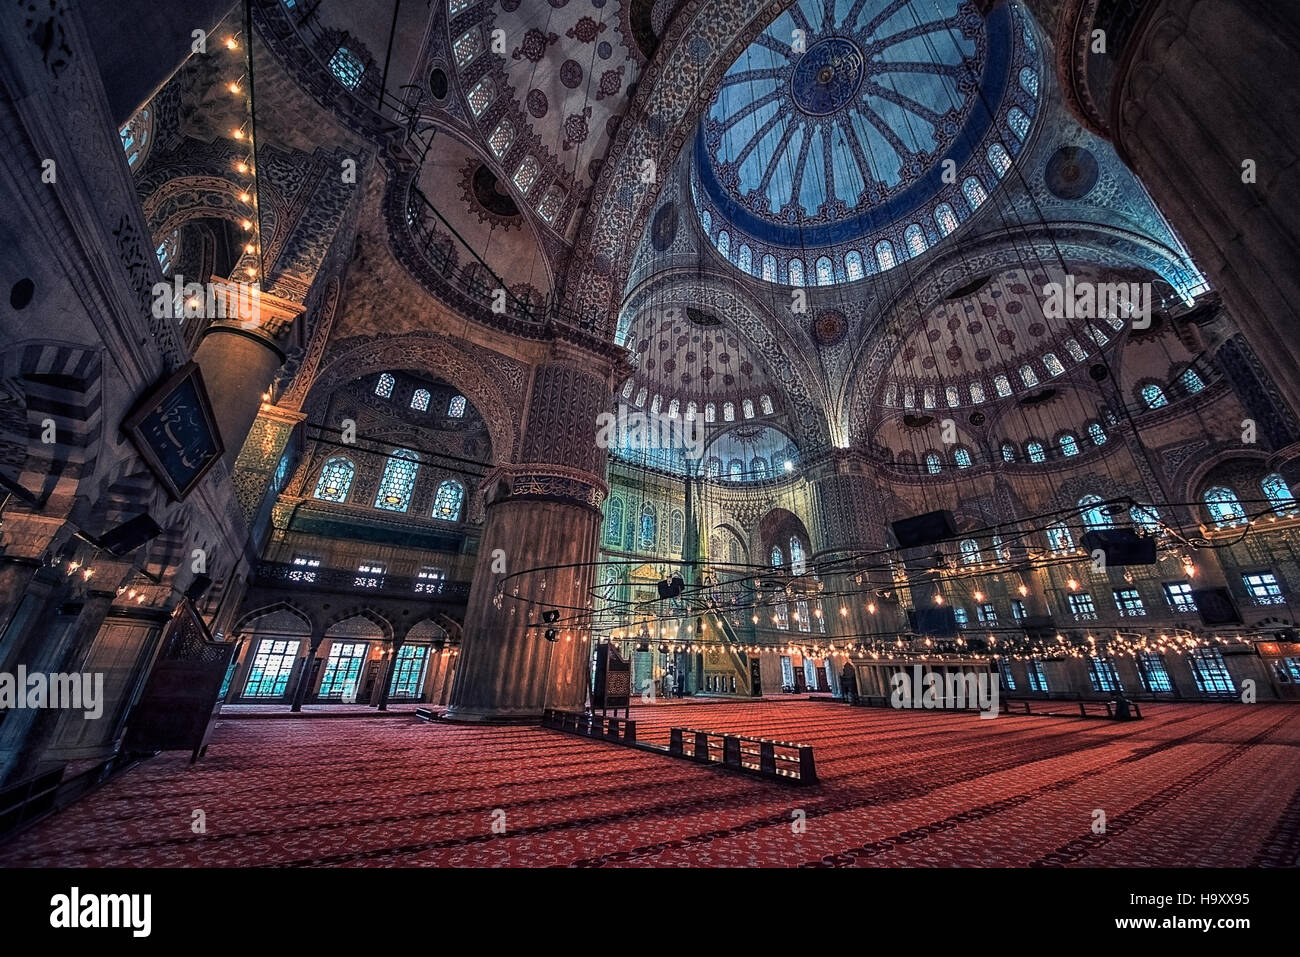 стамбул внутри мечети